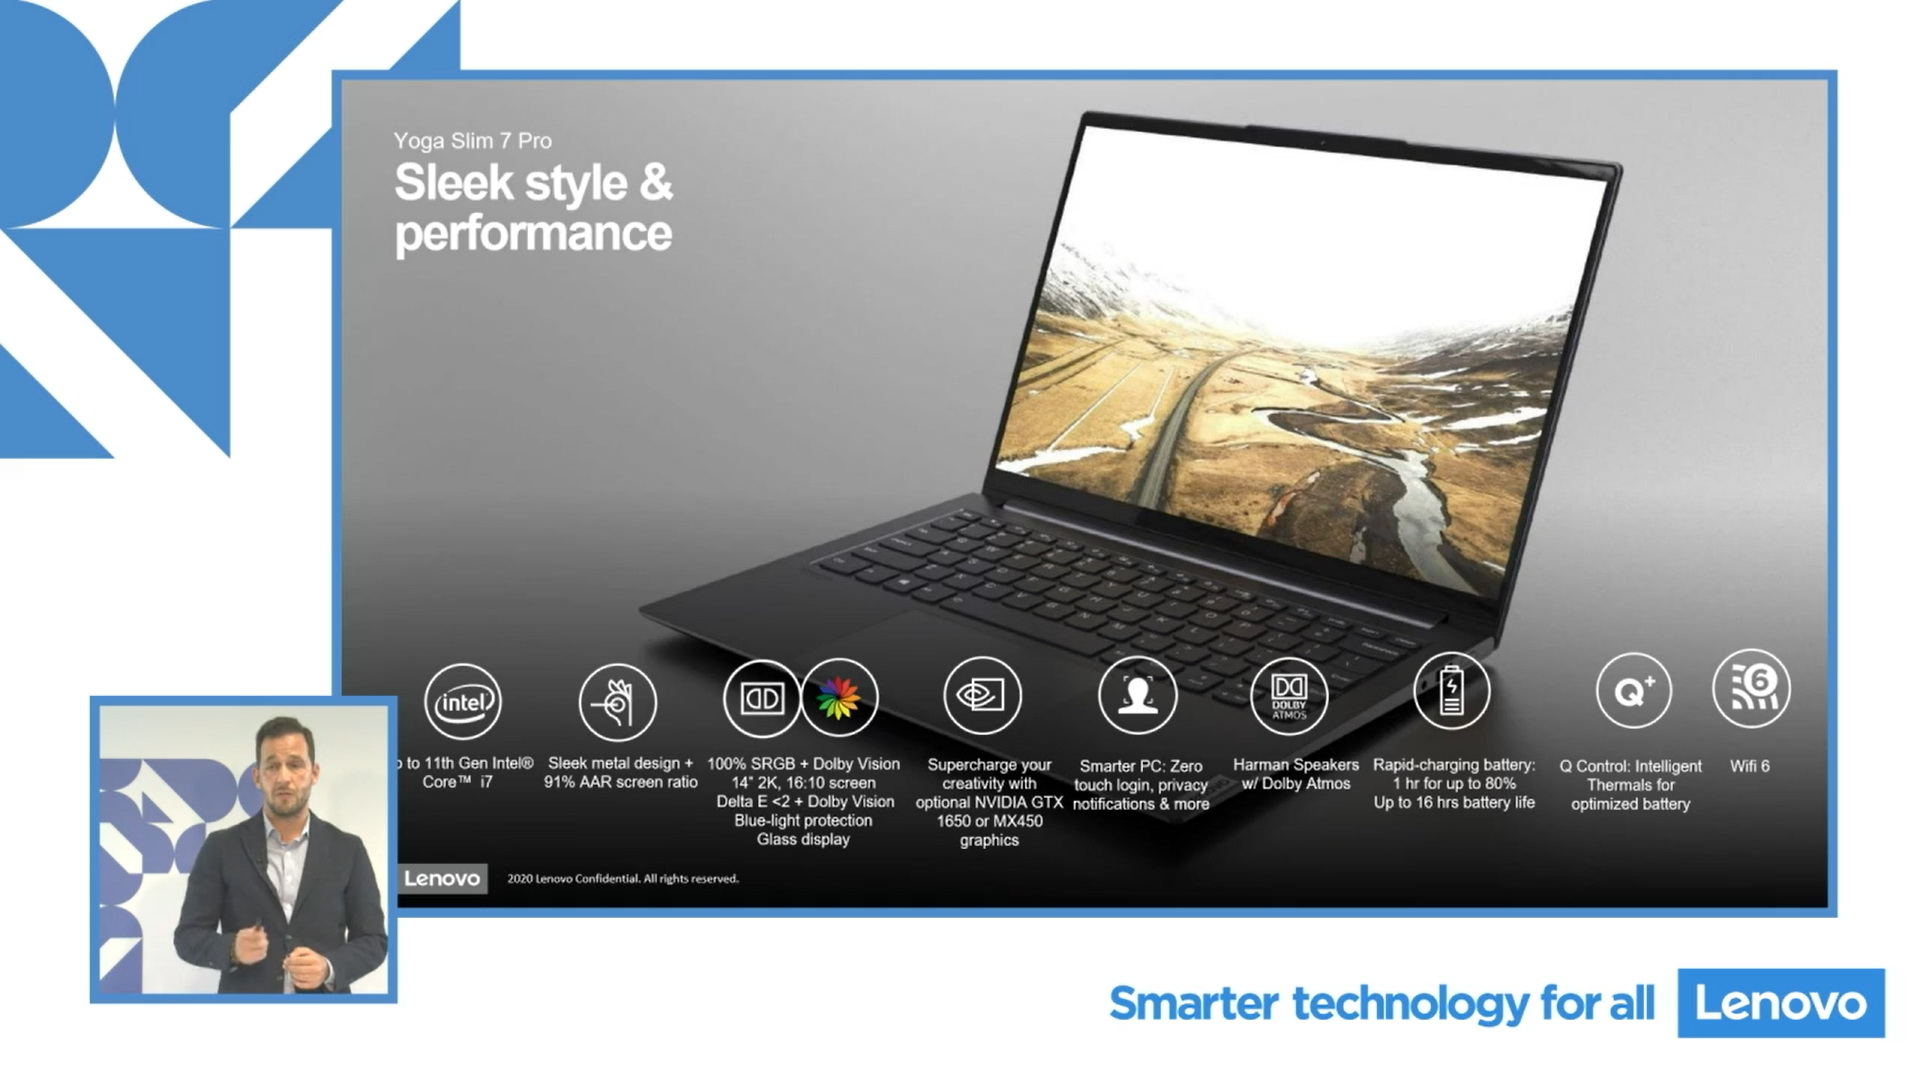 Сайт Ноутбука Lenovo